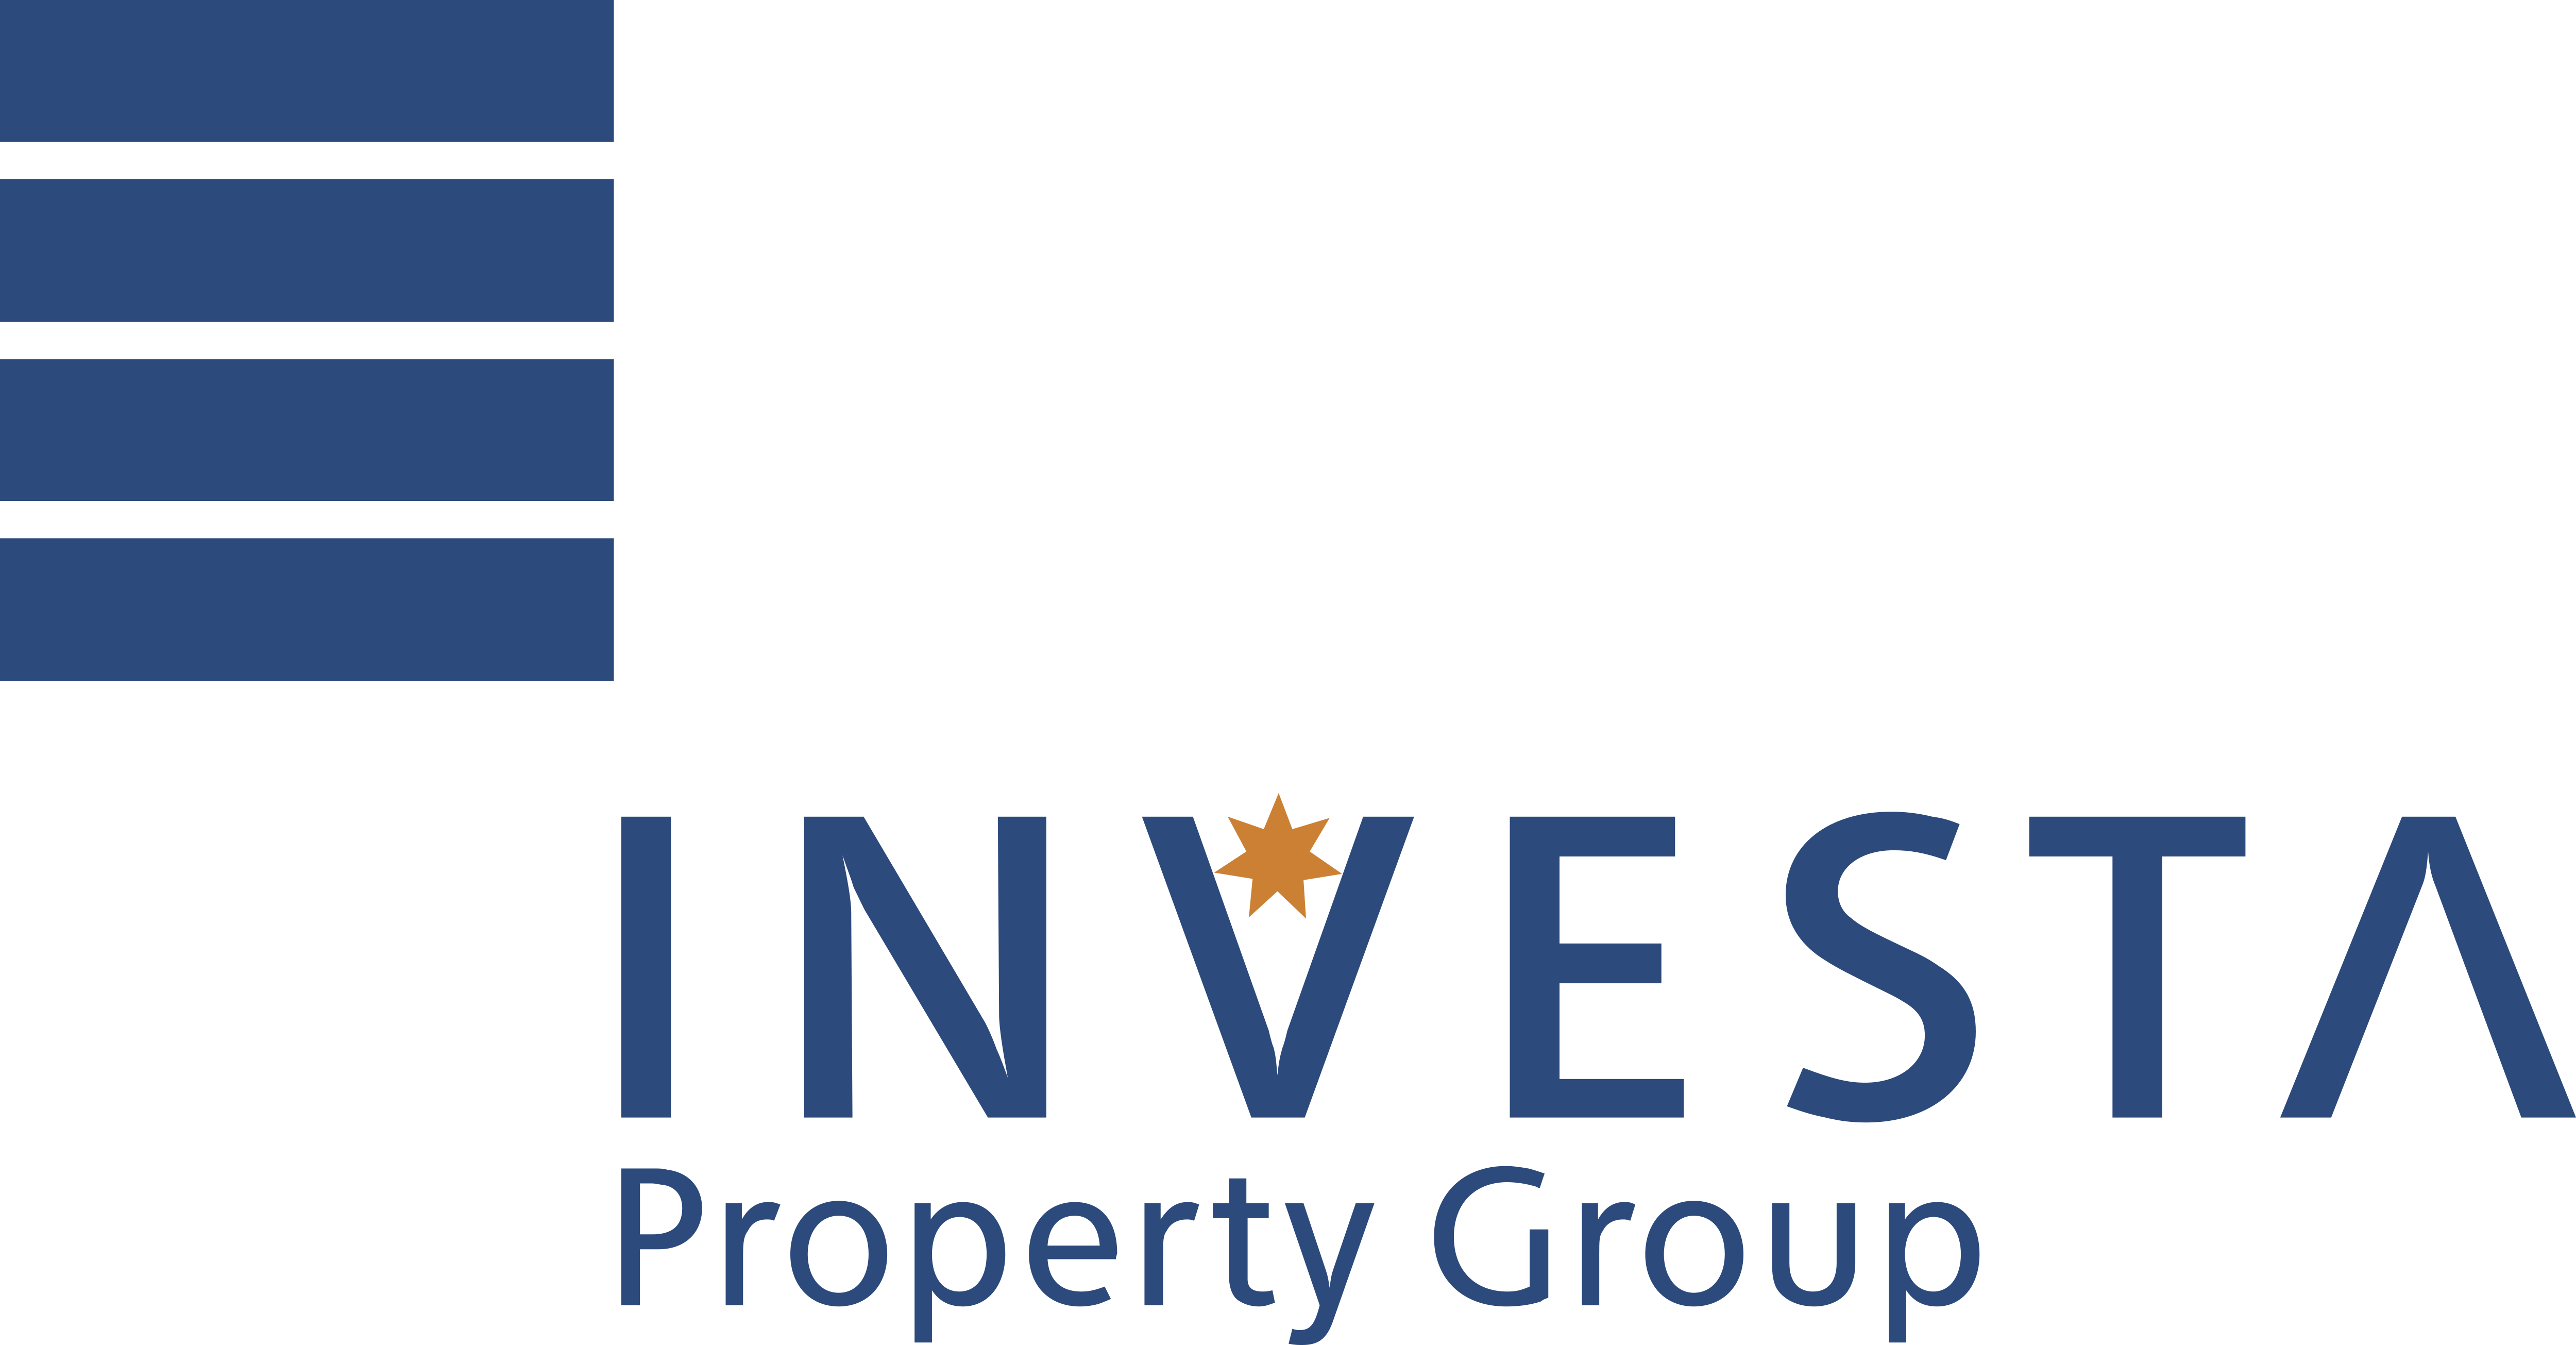 Investa Property Group – Logos Download